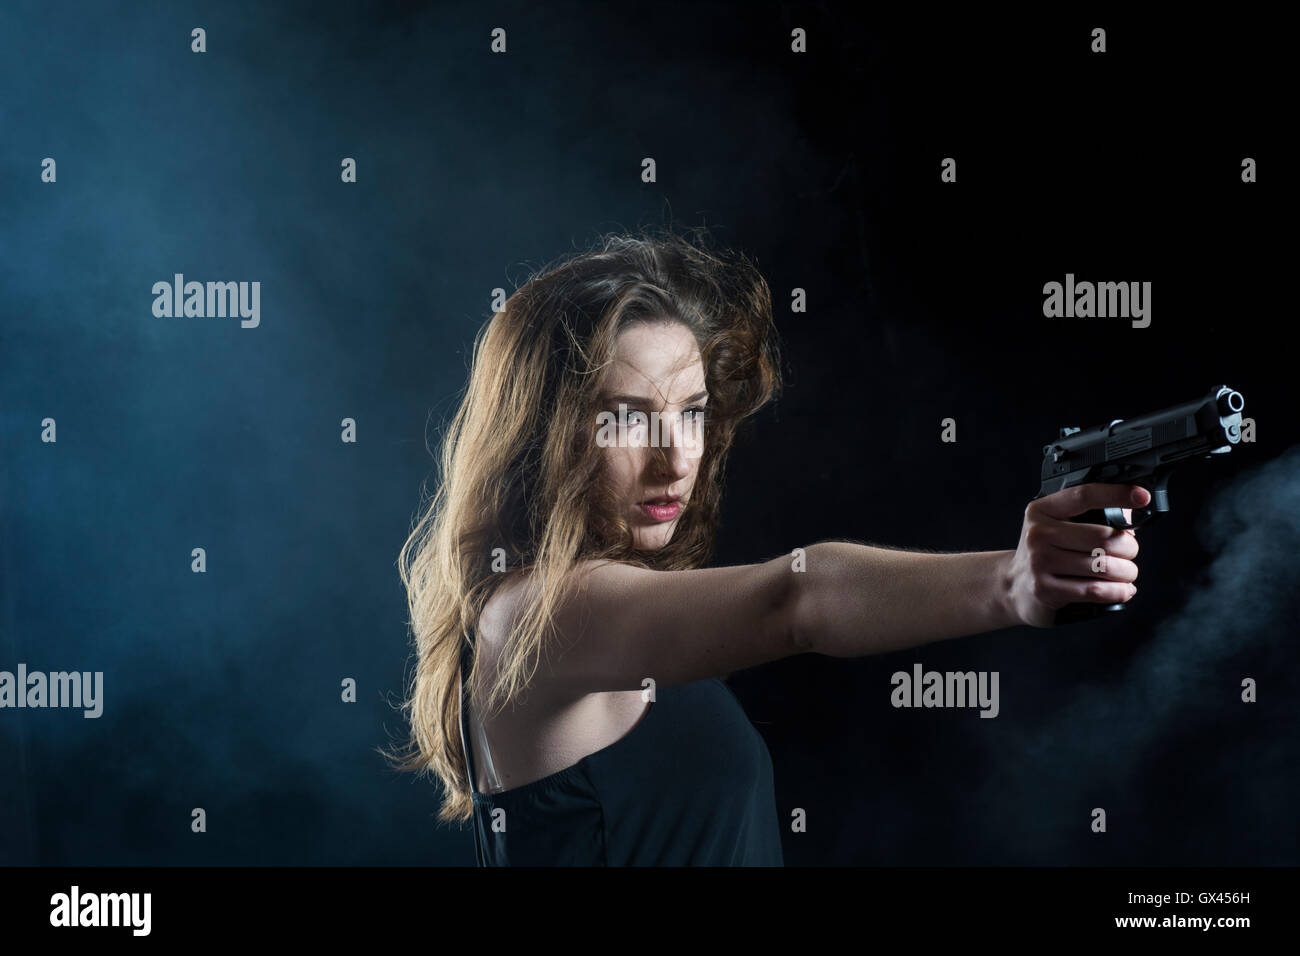 Woman aiming a gun Stock Photo